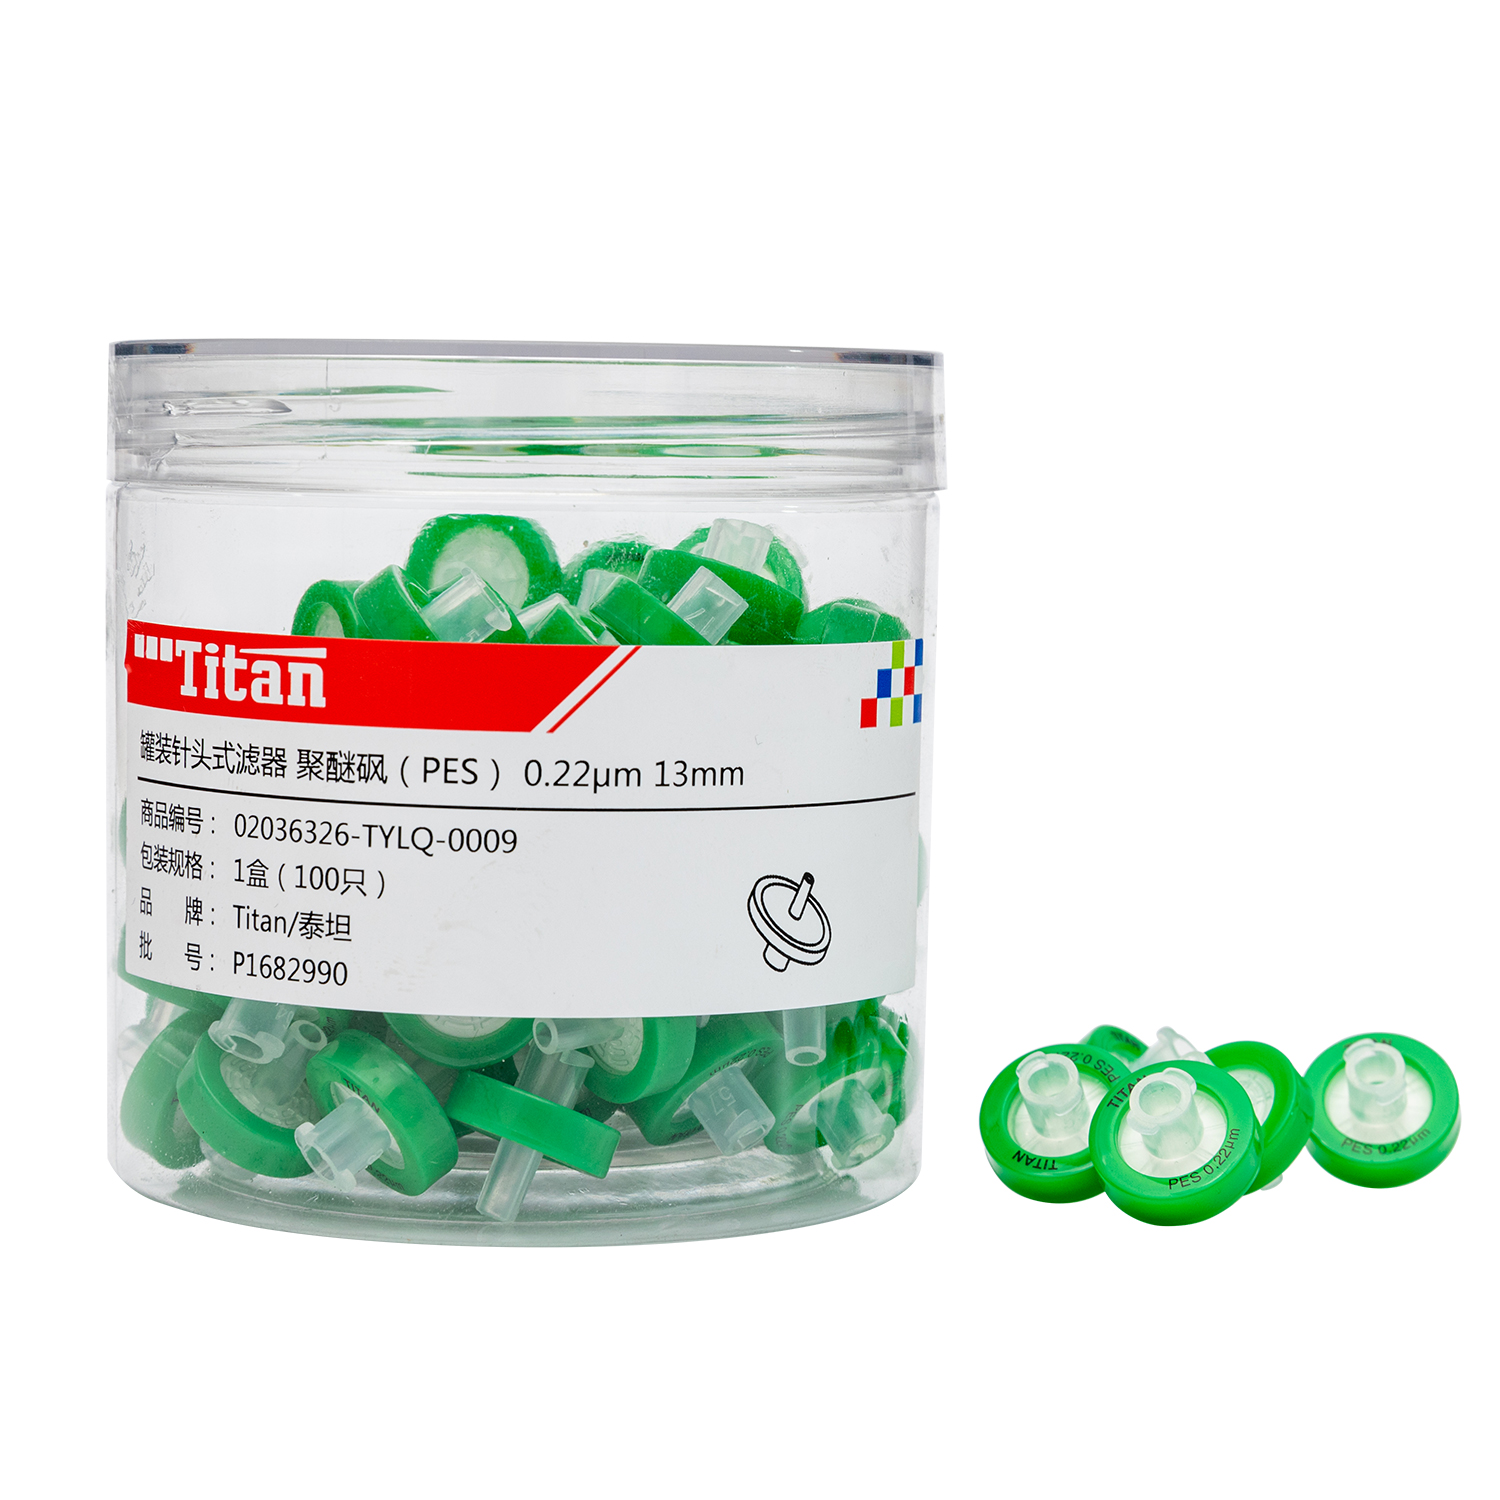 Adamas-Beta Syringe Filter,Syringe Lab Filters, PES (Polyethersulfone) 13mm Diameter 0.22um Pore Size,Non Sterile Filtration,Green